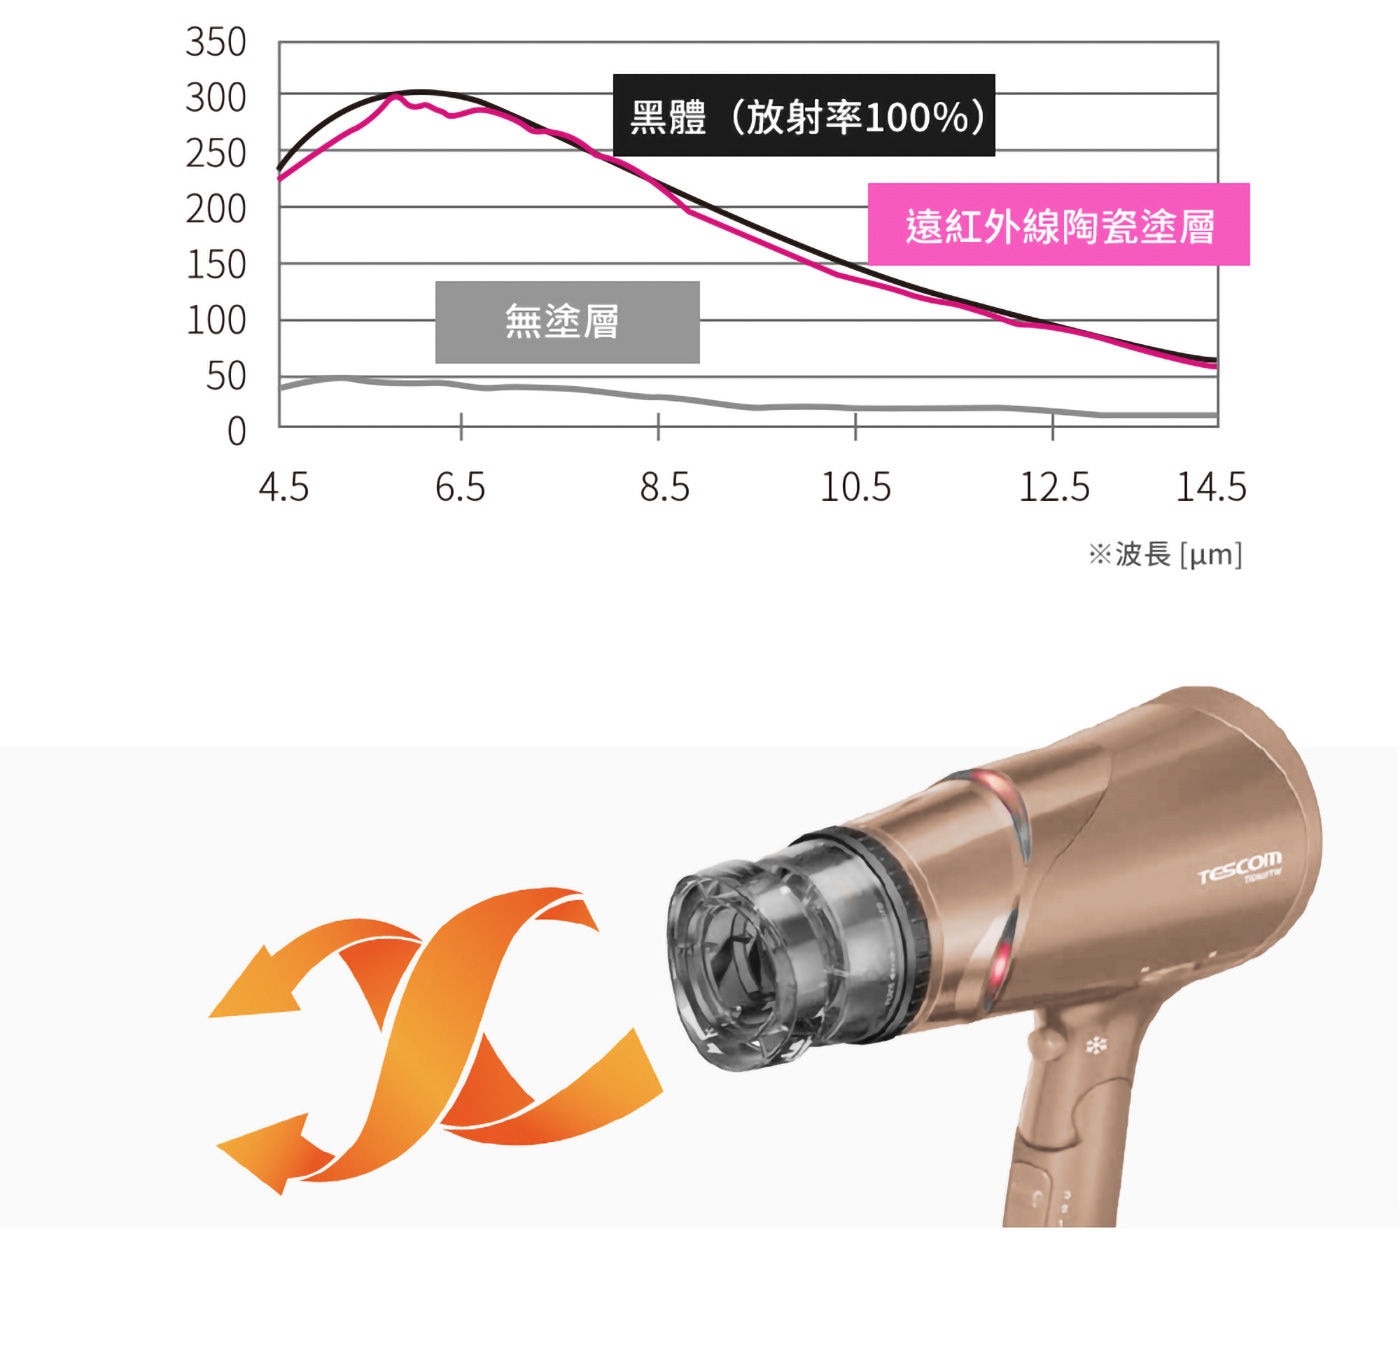 Tescom 負離子吹風機 金色 TID930TW熱量高瓦數更有助速乾快速使秀髮吹乾穩定溫風